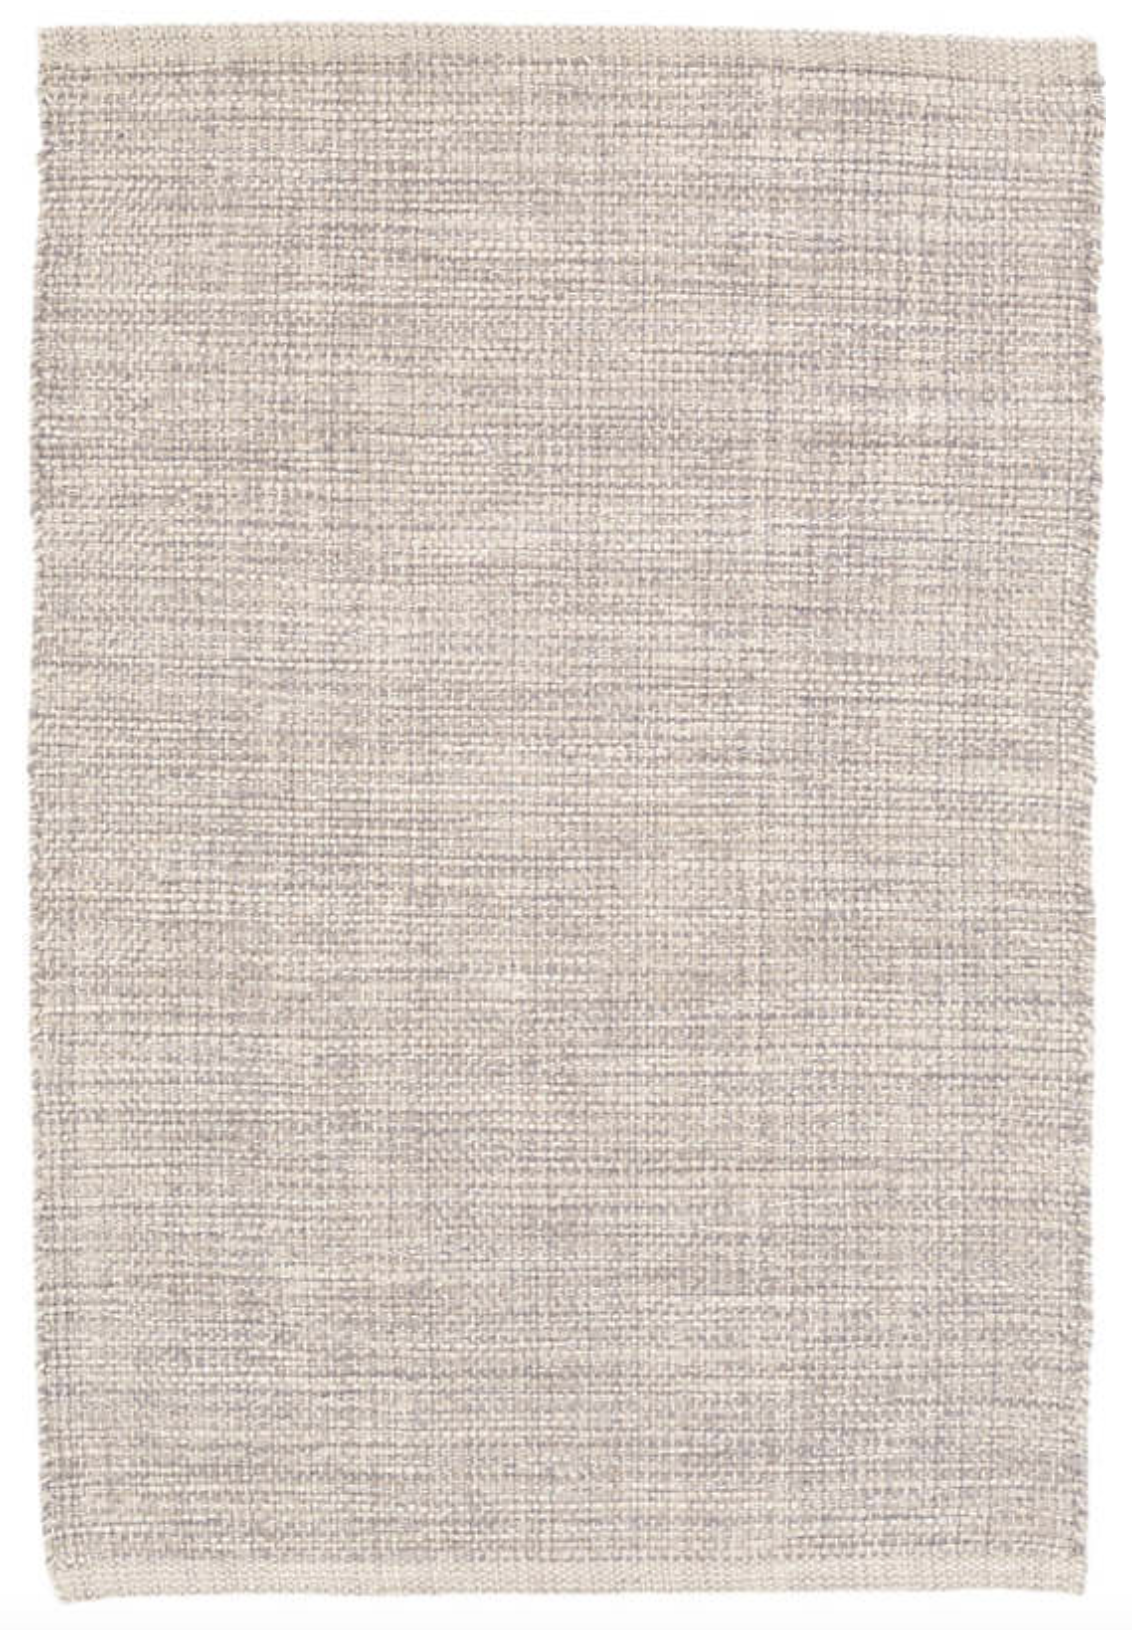 Dash & Albert - Woven Cotton Rug, Marled grey